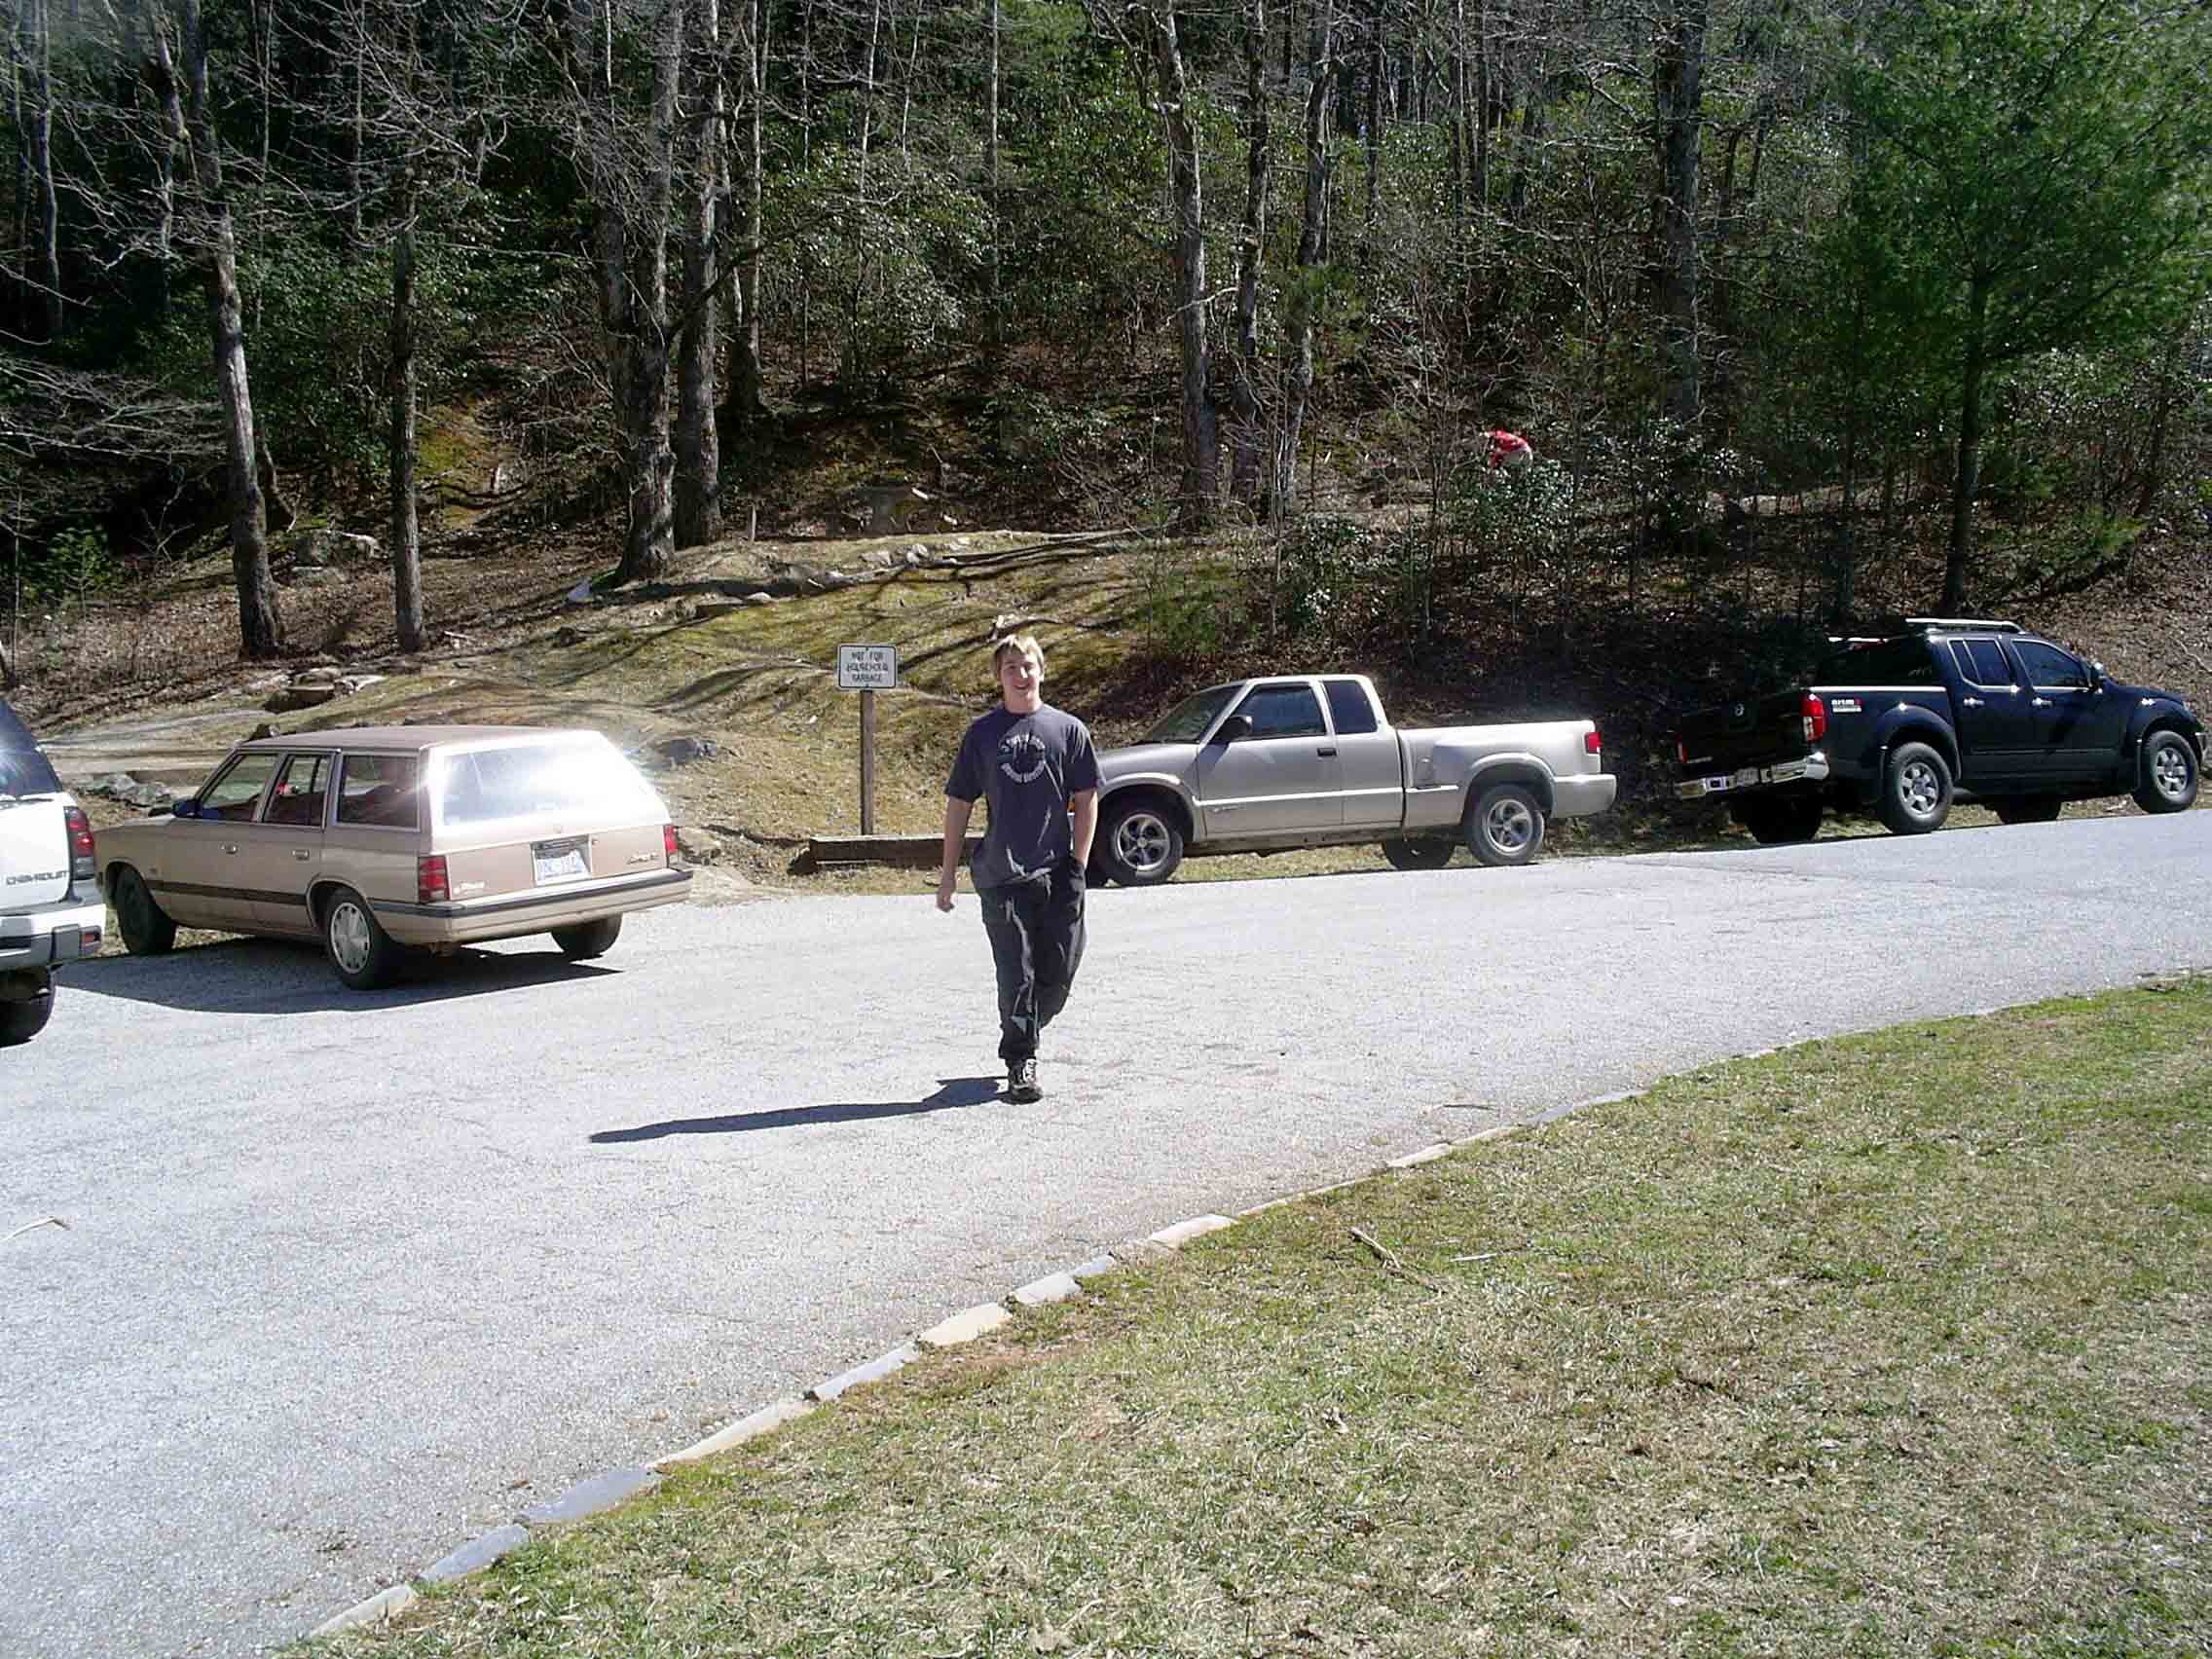 mm 8.8 - Bodyguard at Dick's Creek Gap parking lot, GA(US 76). Courtesy skidsteer @ alltel.net